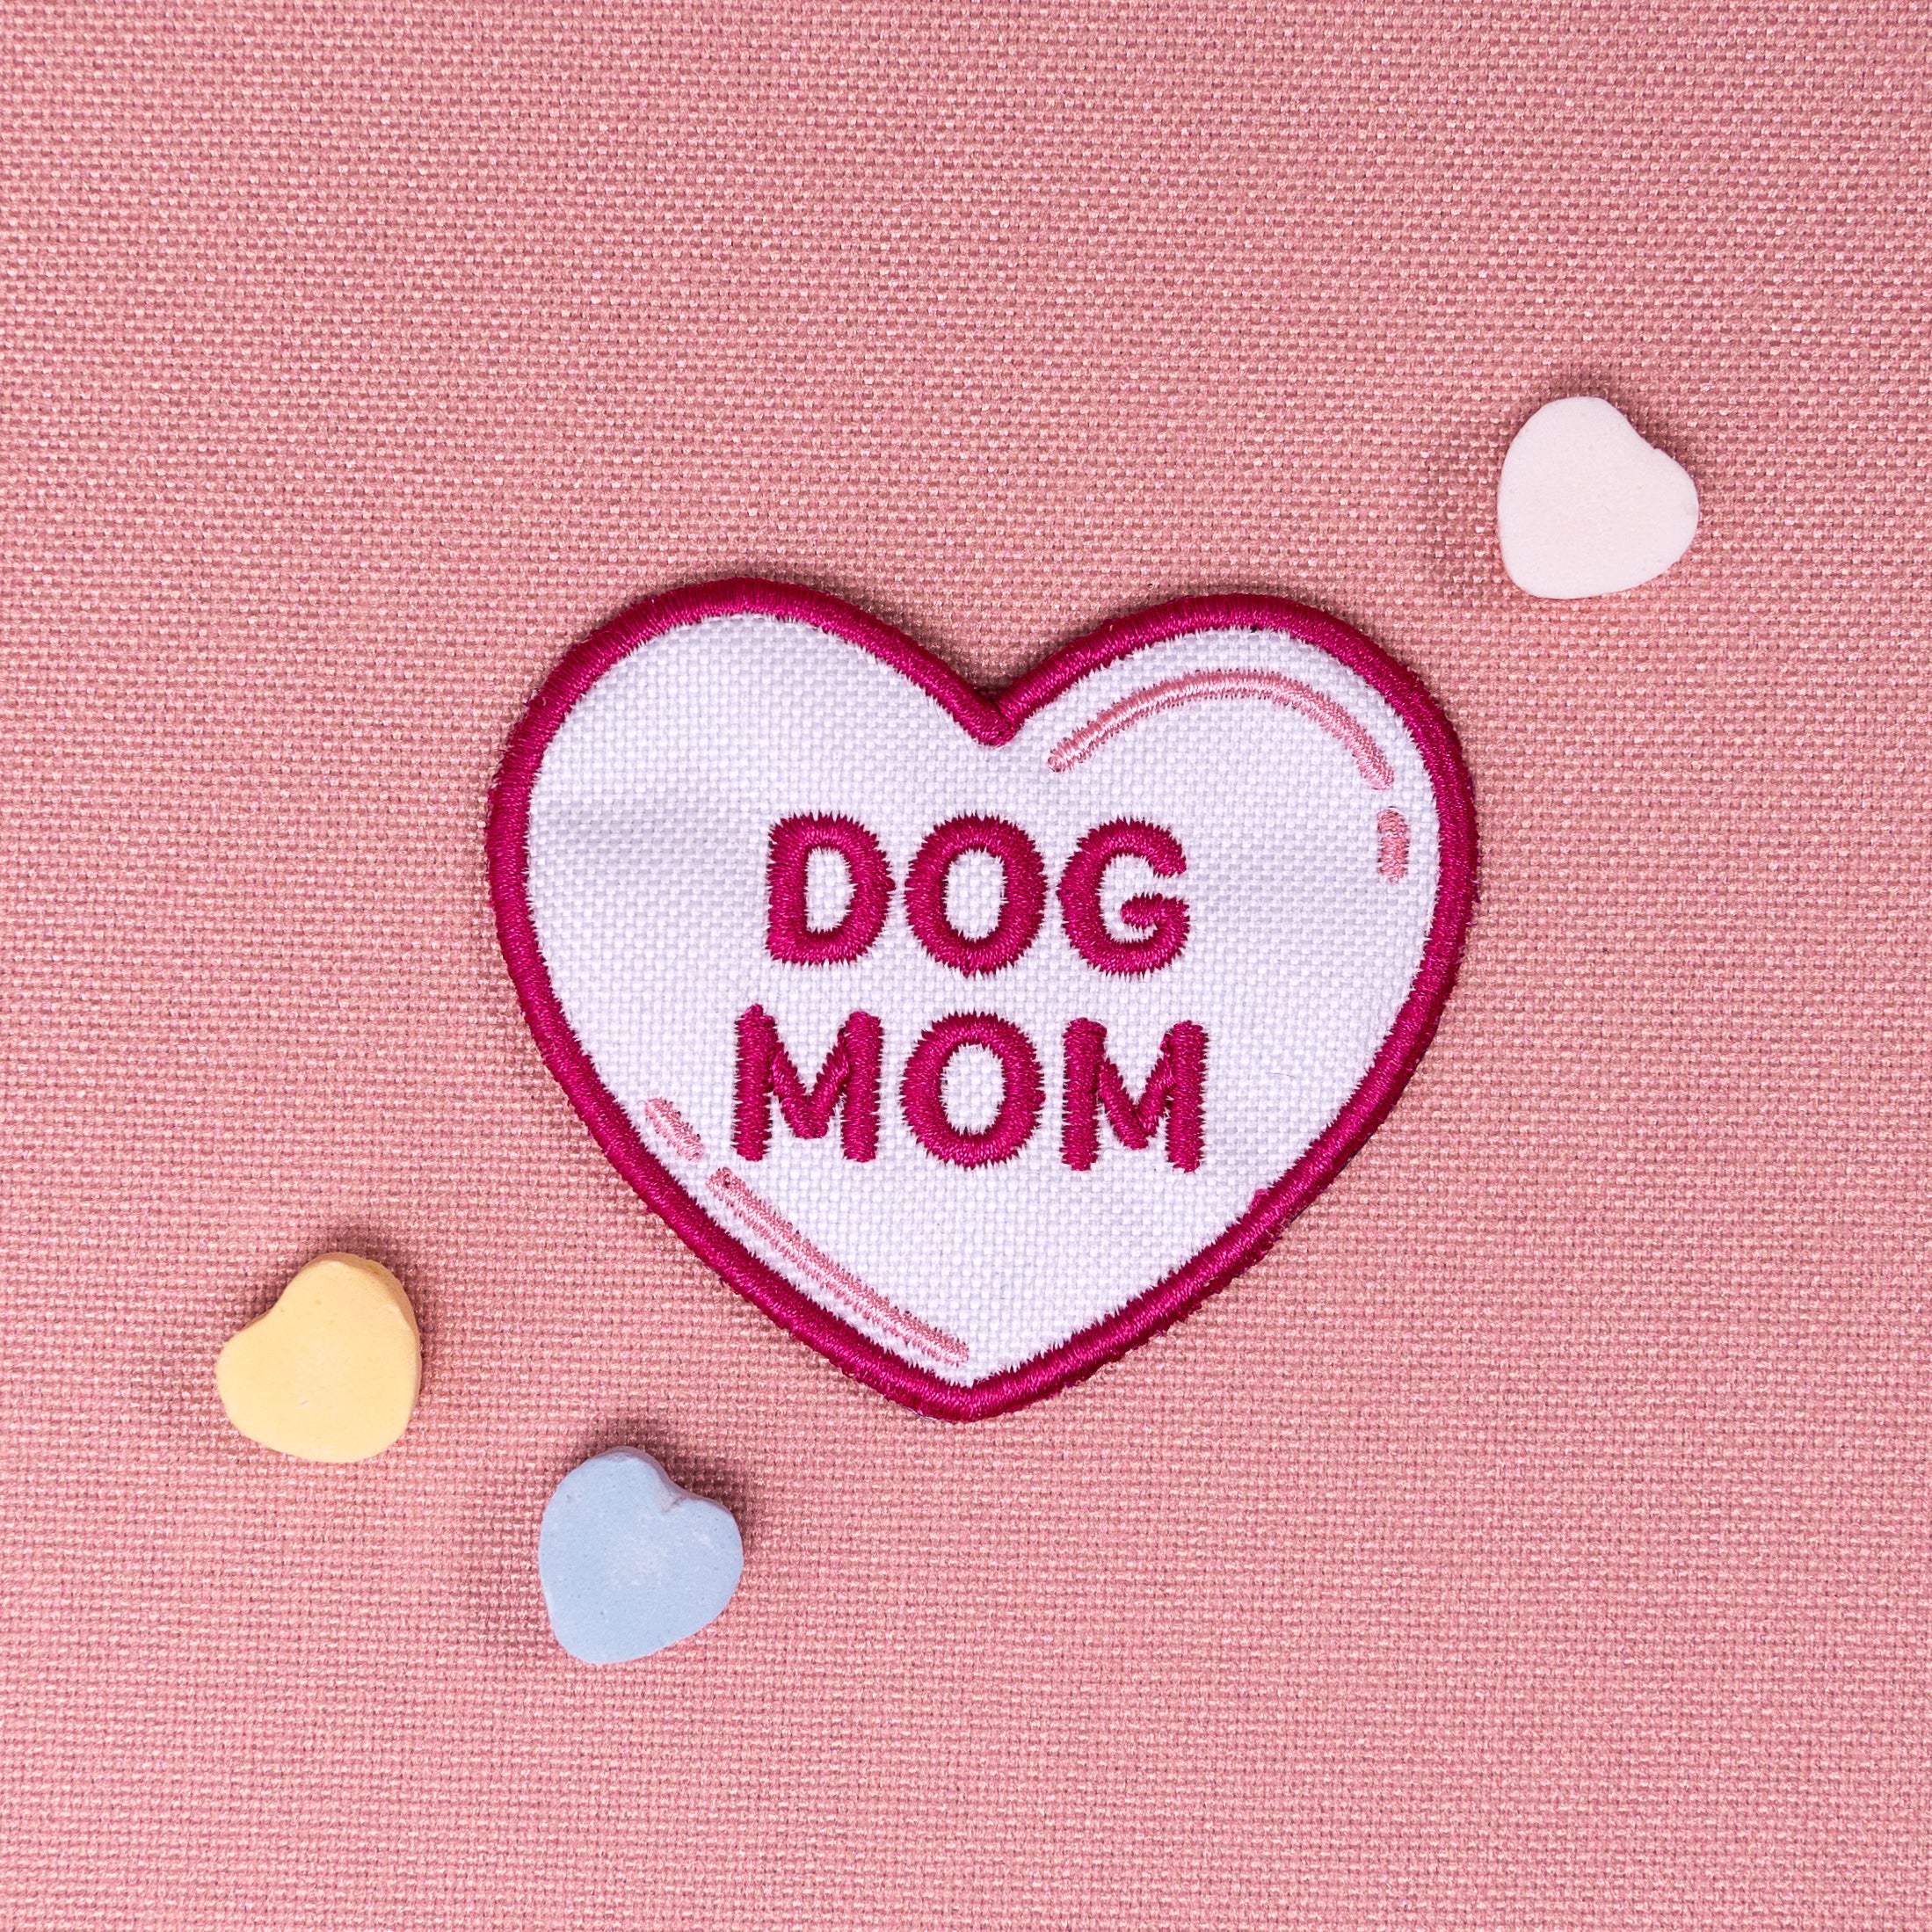 Dog Mom Heart Patch